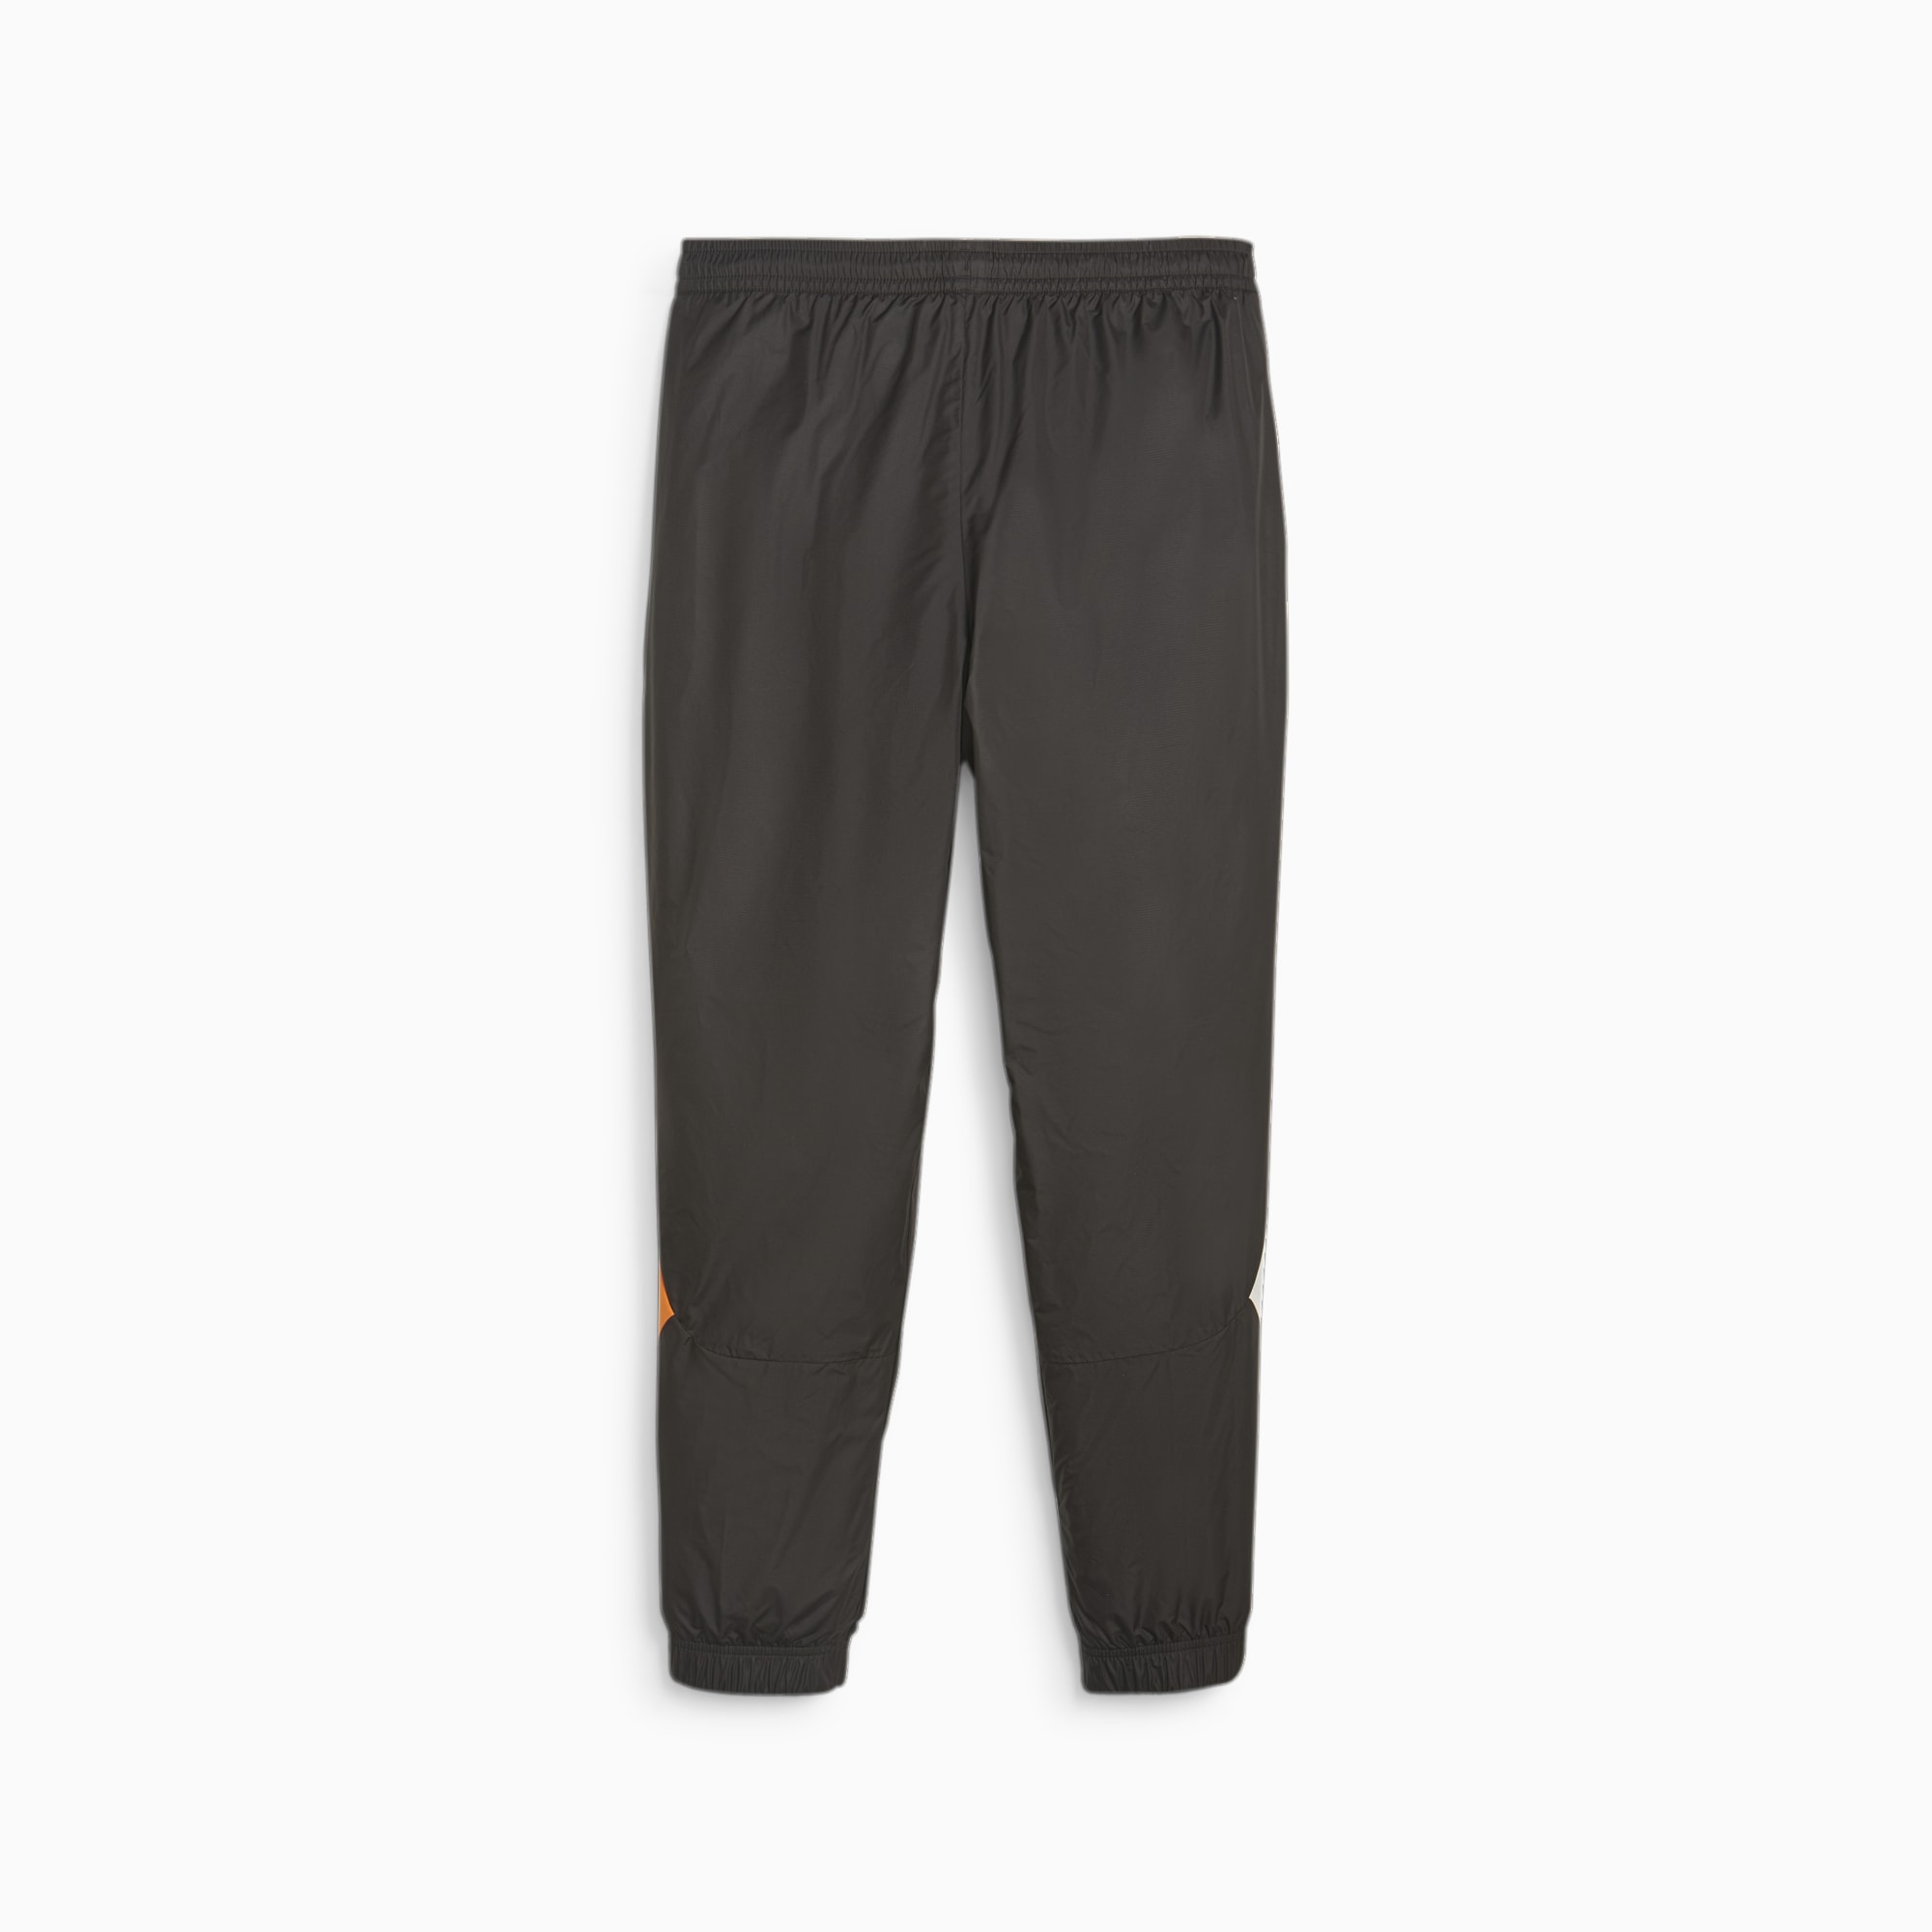 Men's PUMA Olympique De Marseille Prematch Football Pants, Black/Flat Dark Grey, Size M, Clothing